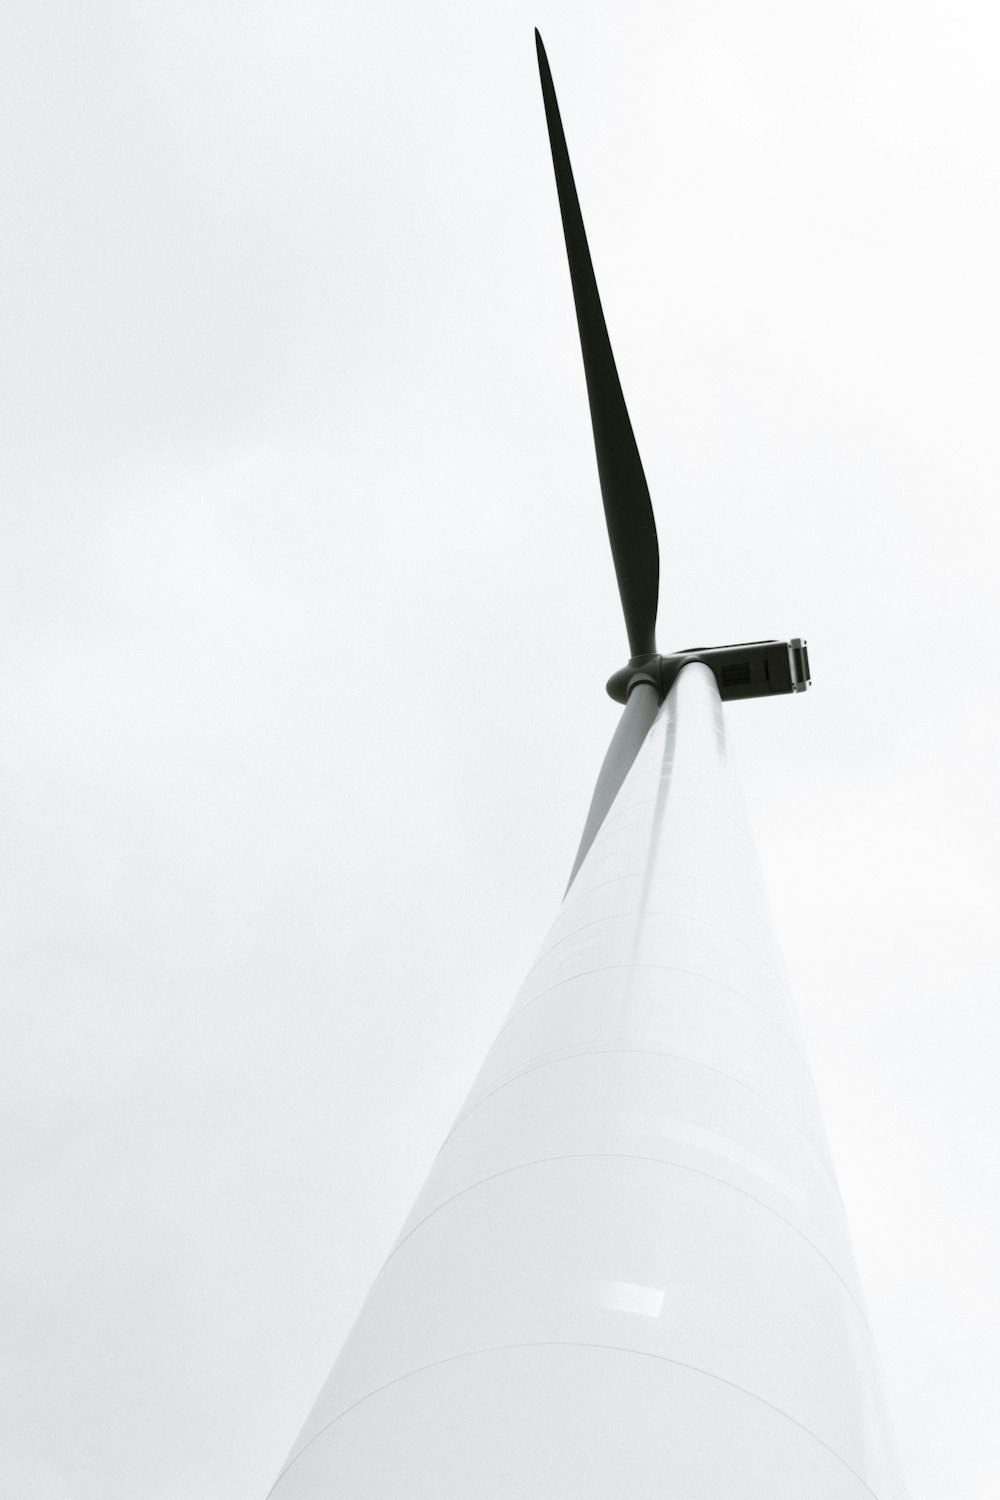 white and black wind turbine